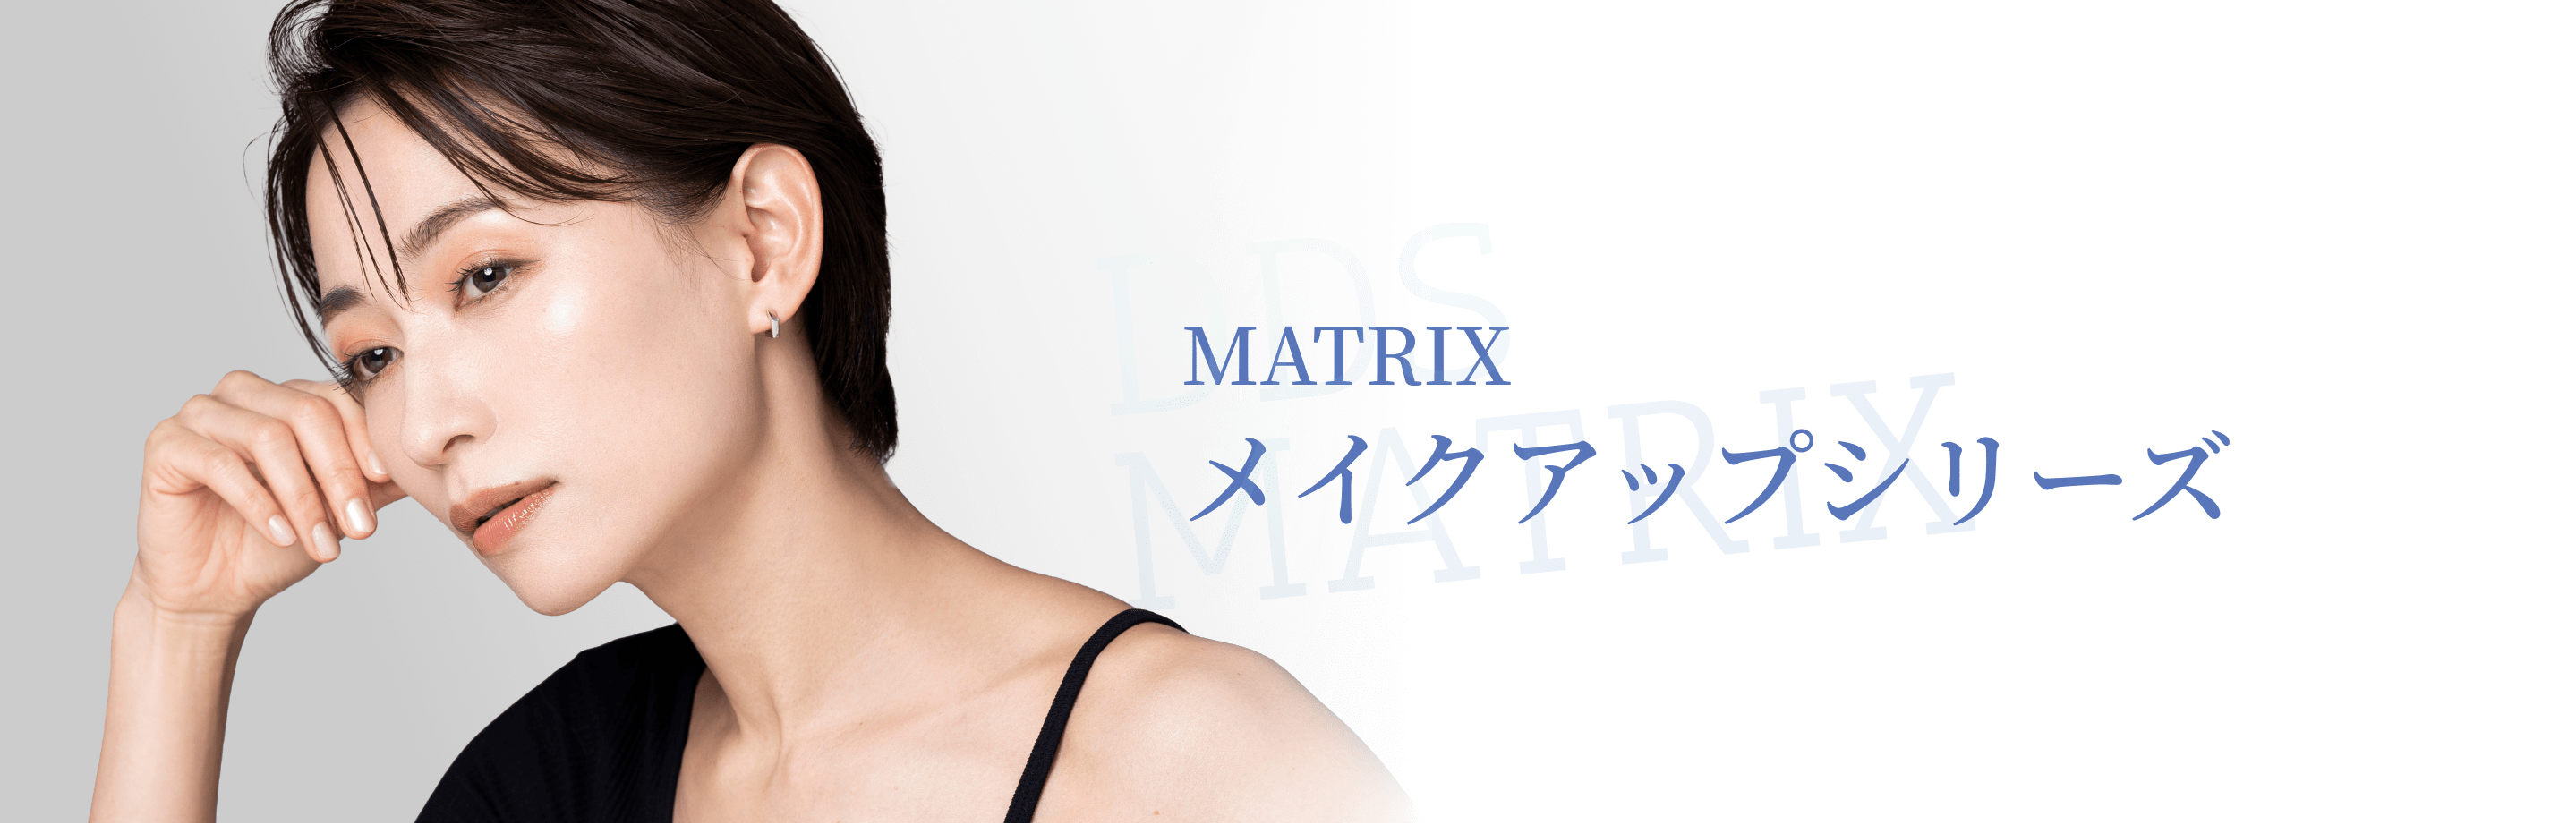 MATRIX メイクアップシリーズ